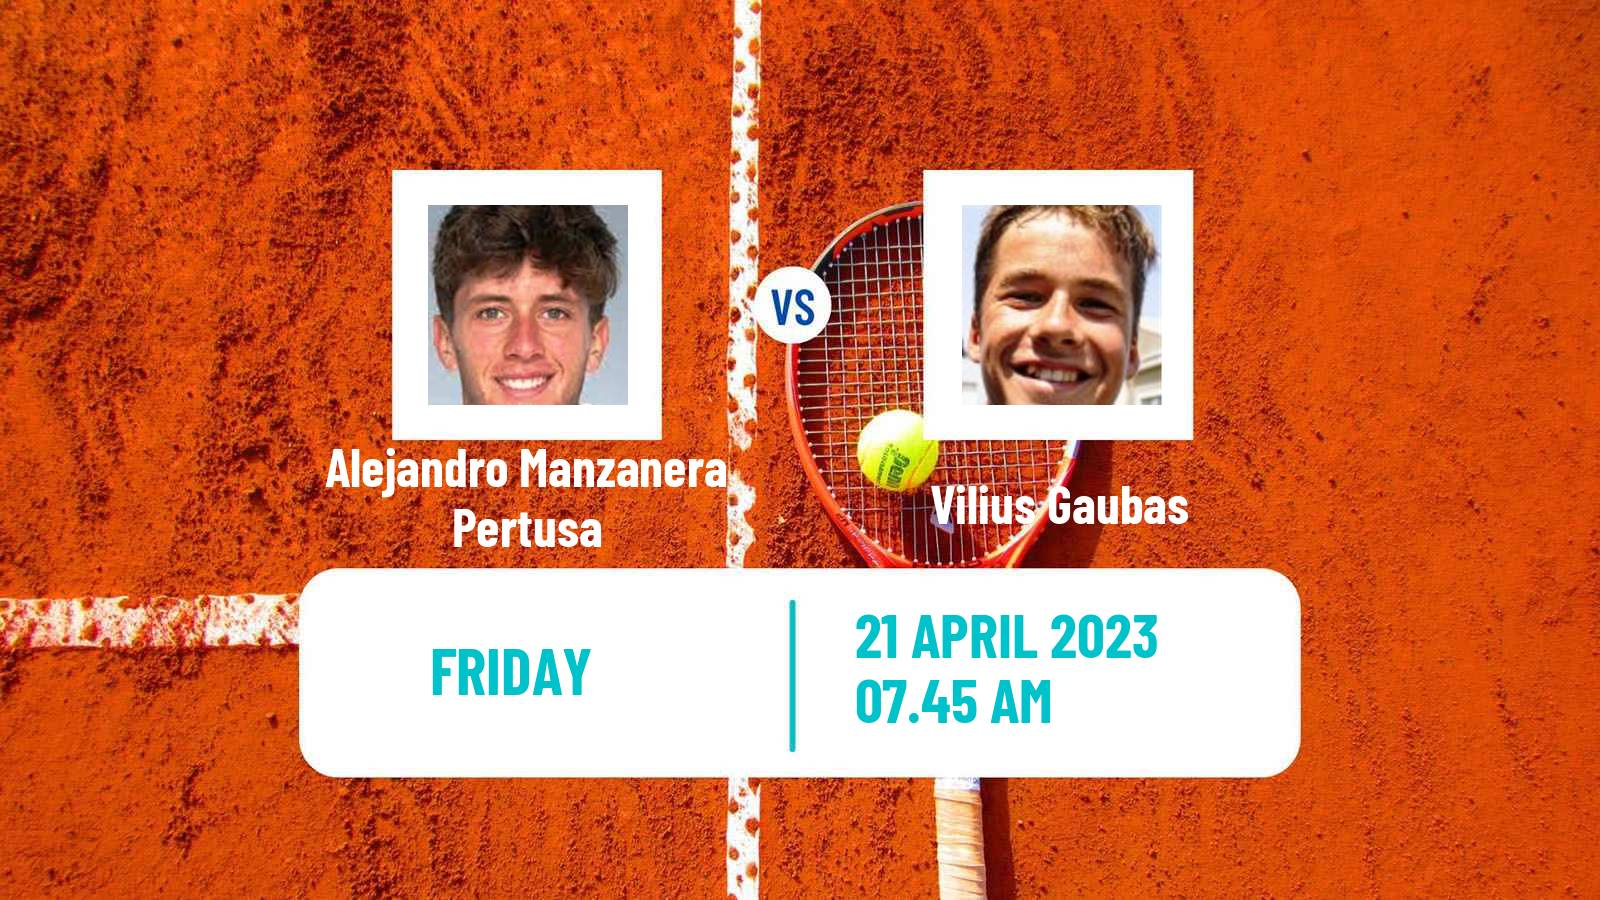 Tennis ITF Tournaments Alejandro Manzanera Pertusa - Vilius Gaubas